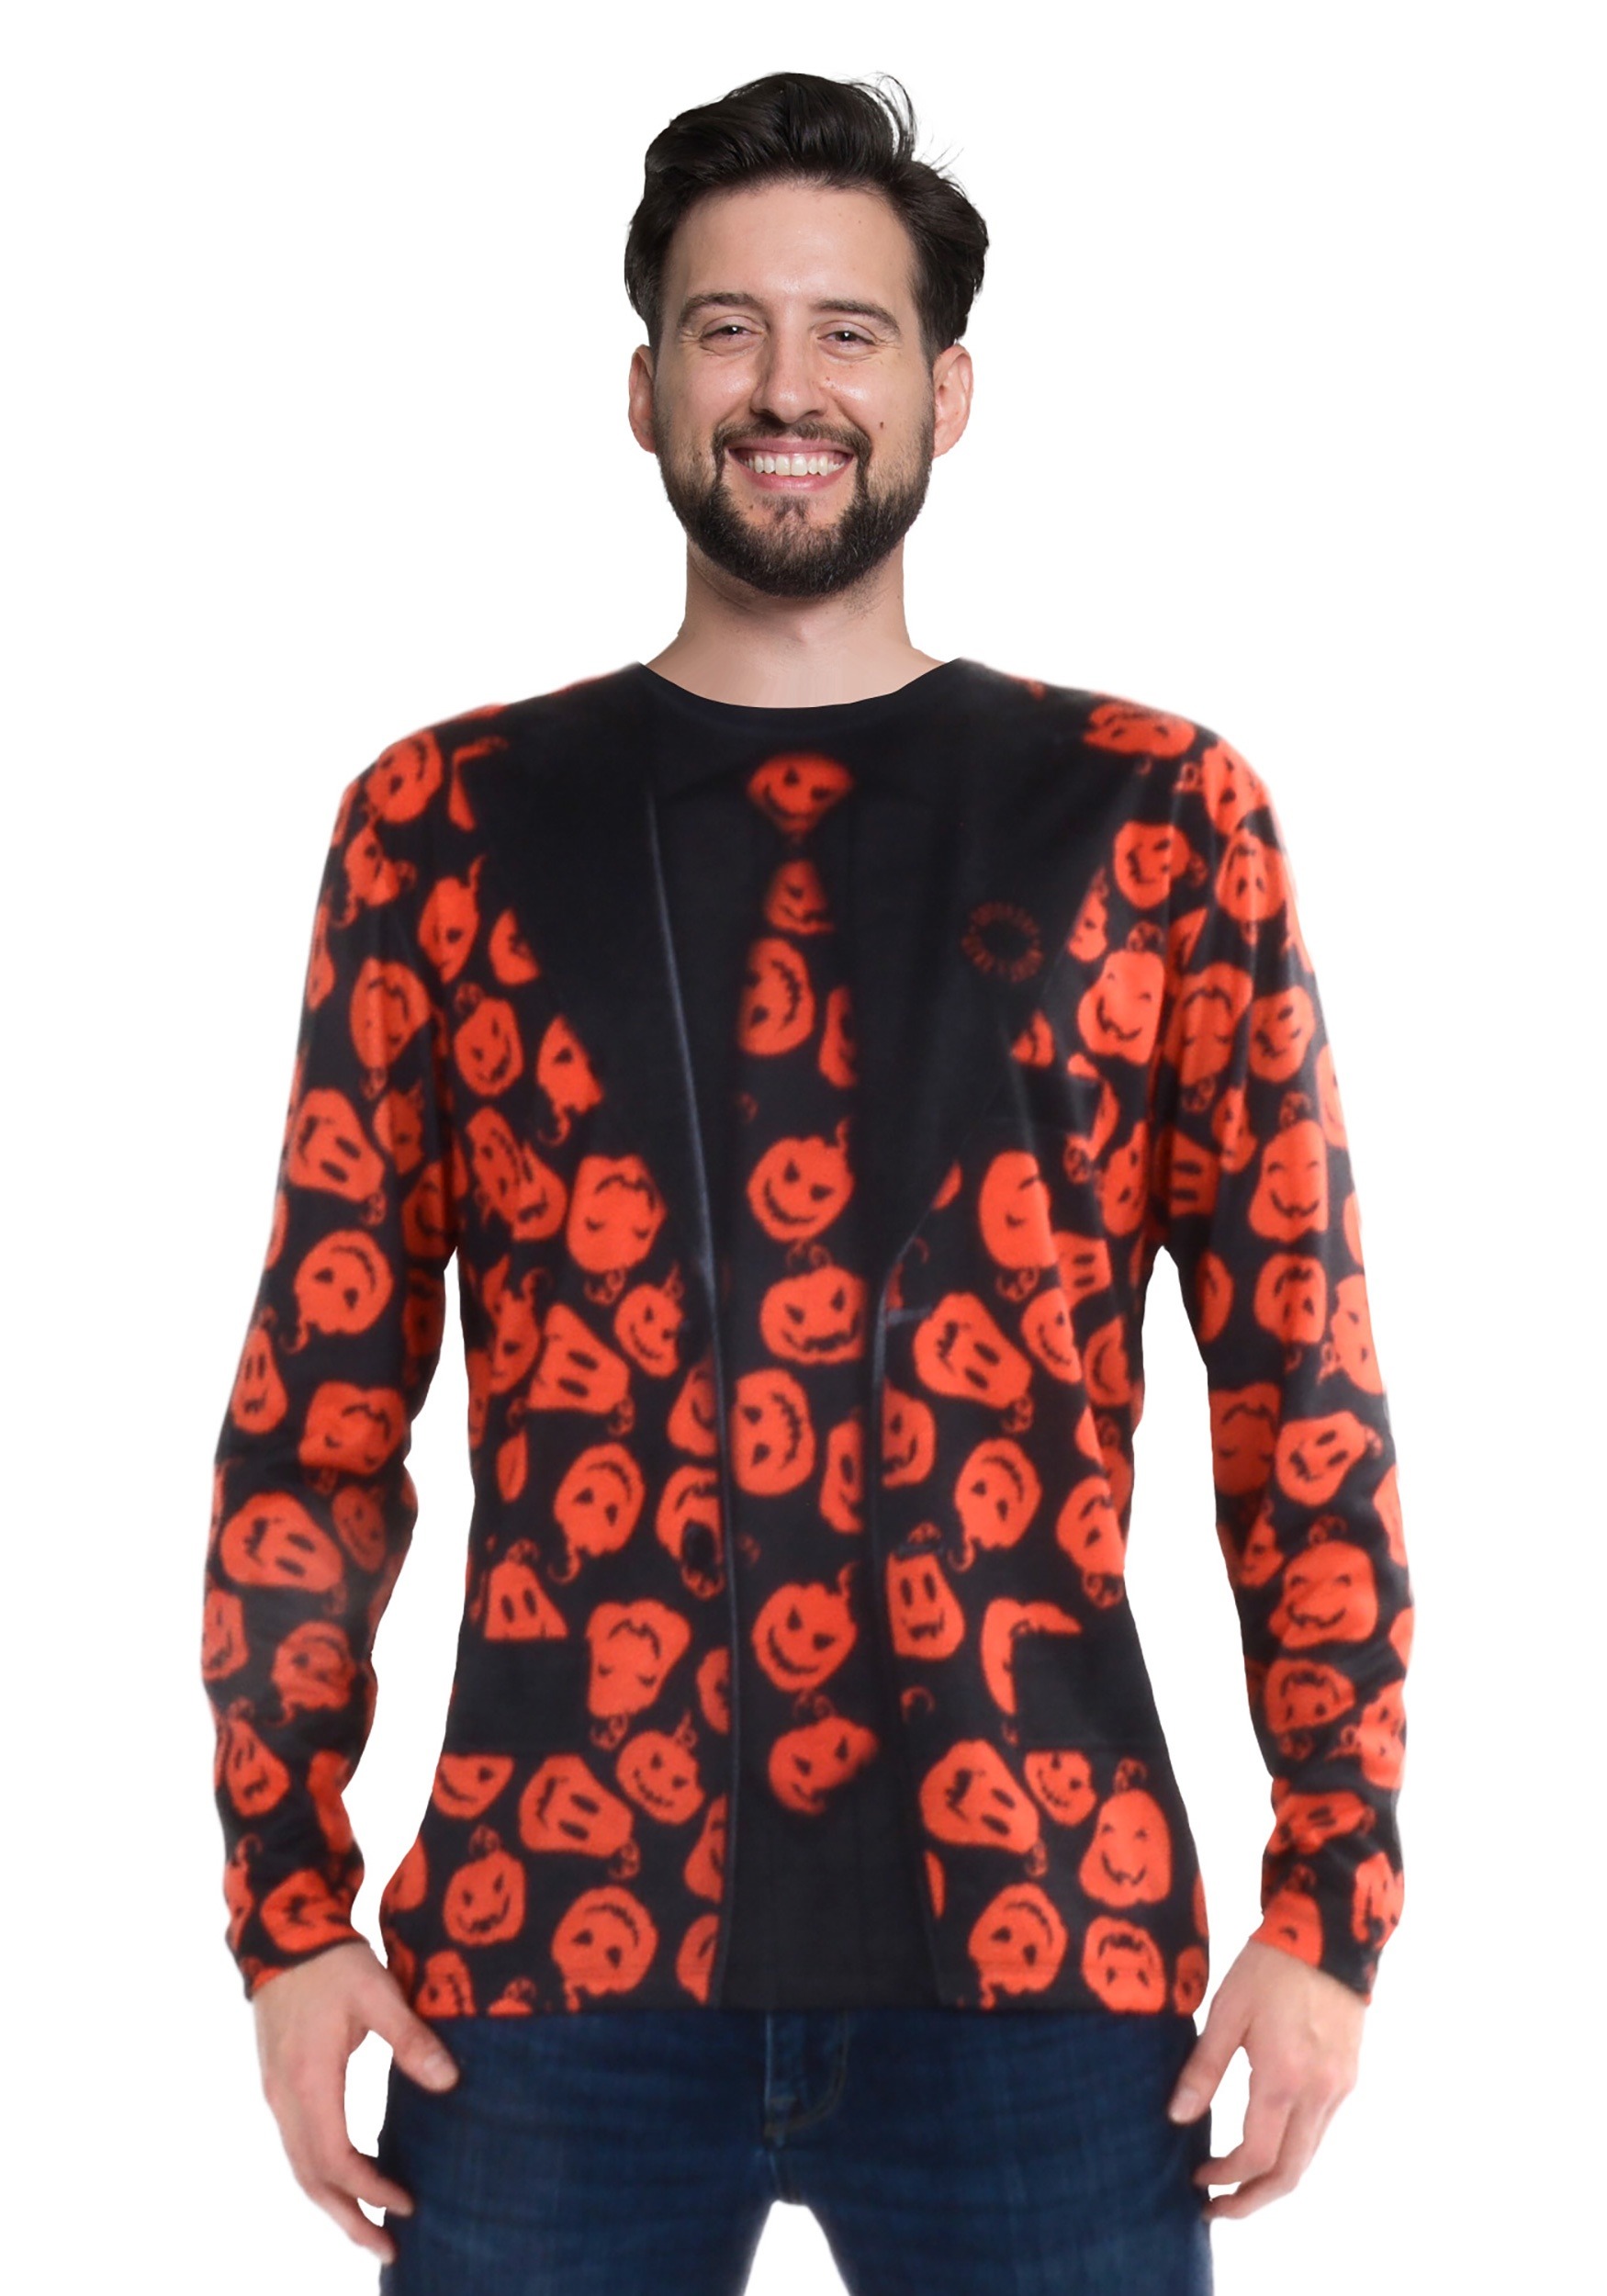 Pumpkins Suit Adult Costume Halloween Saturday Night Live SNL TV Show David...